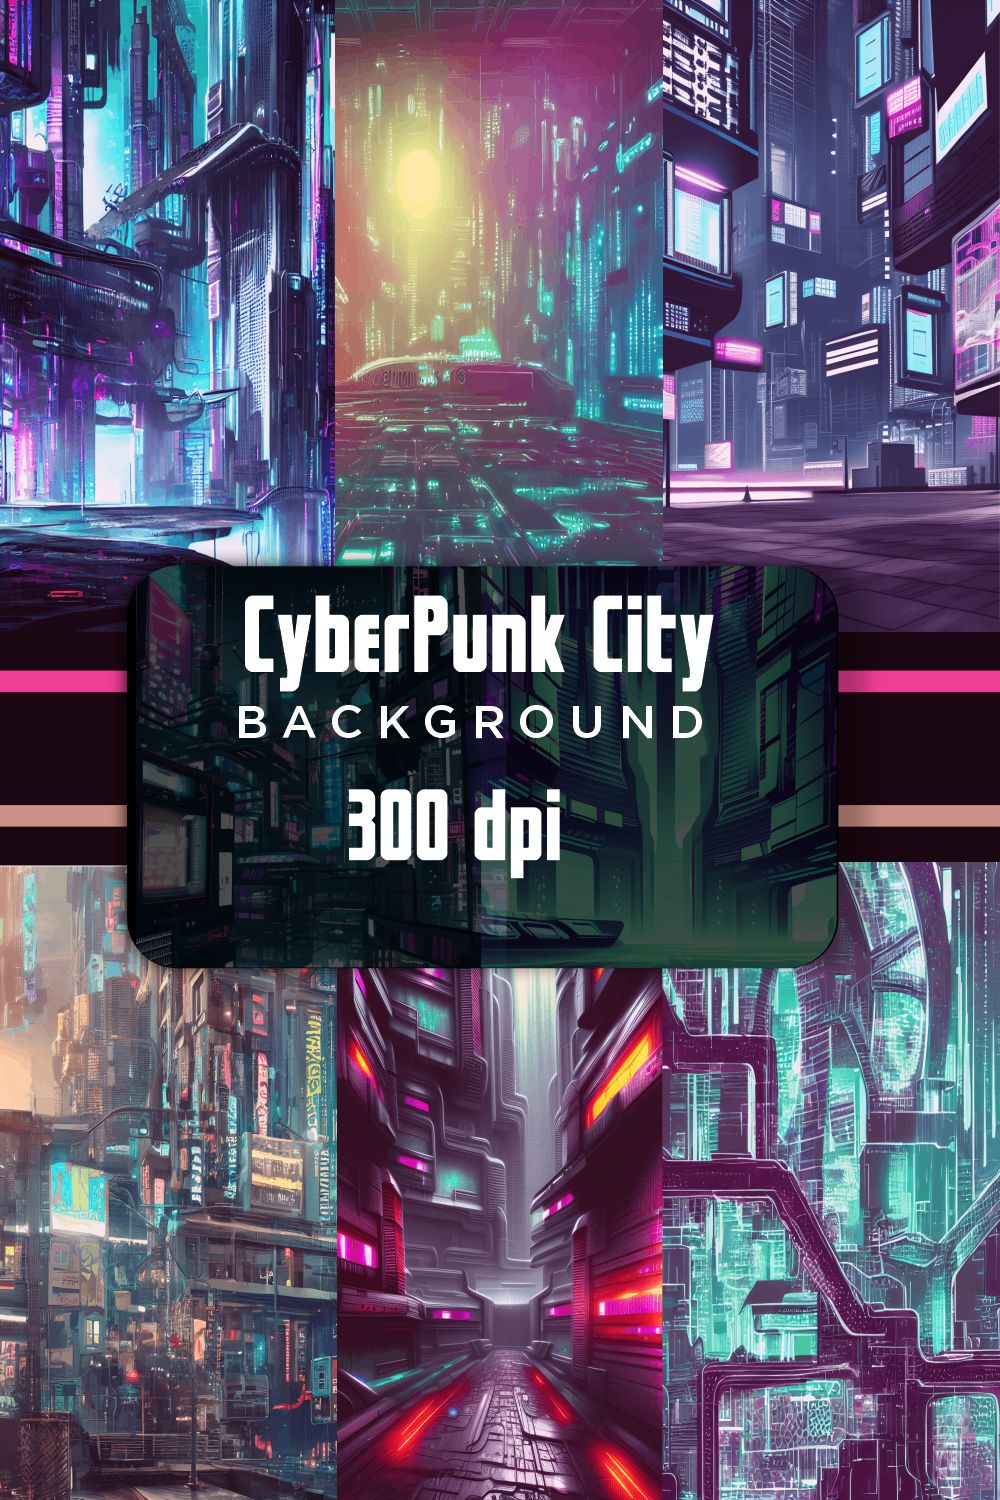 Futuristic City Cyberpunk Background pinterest image.